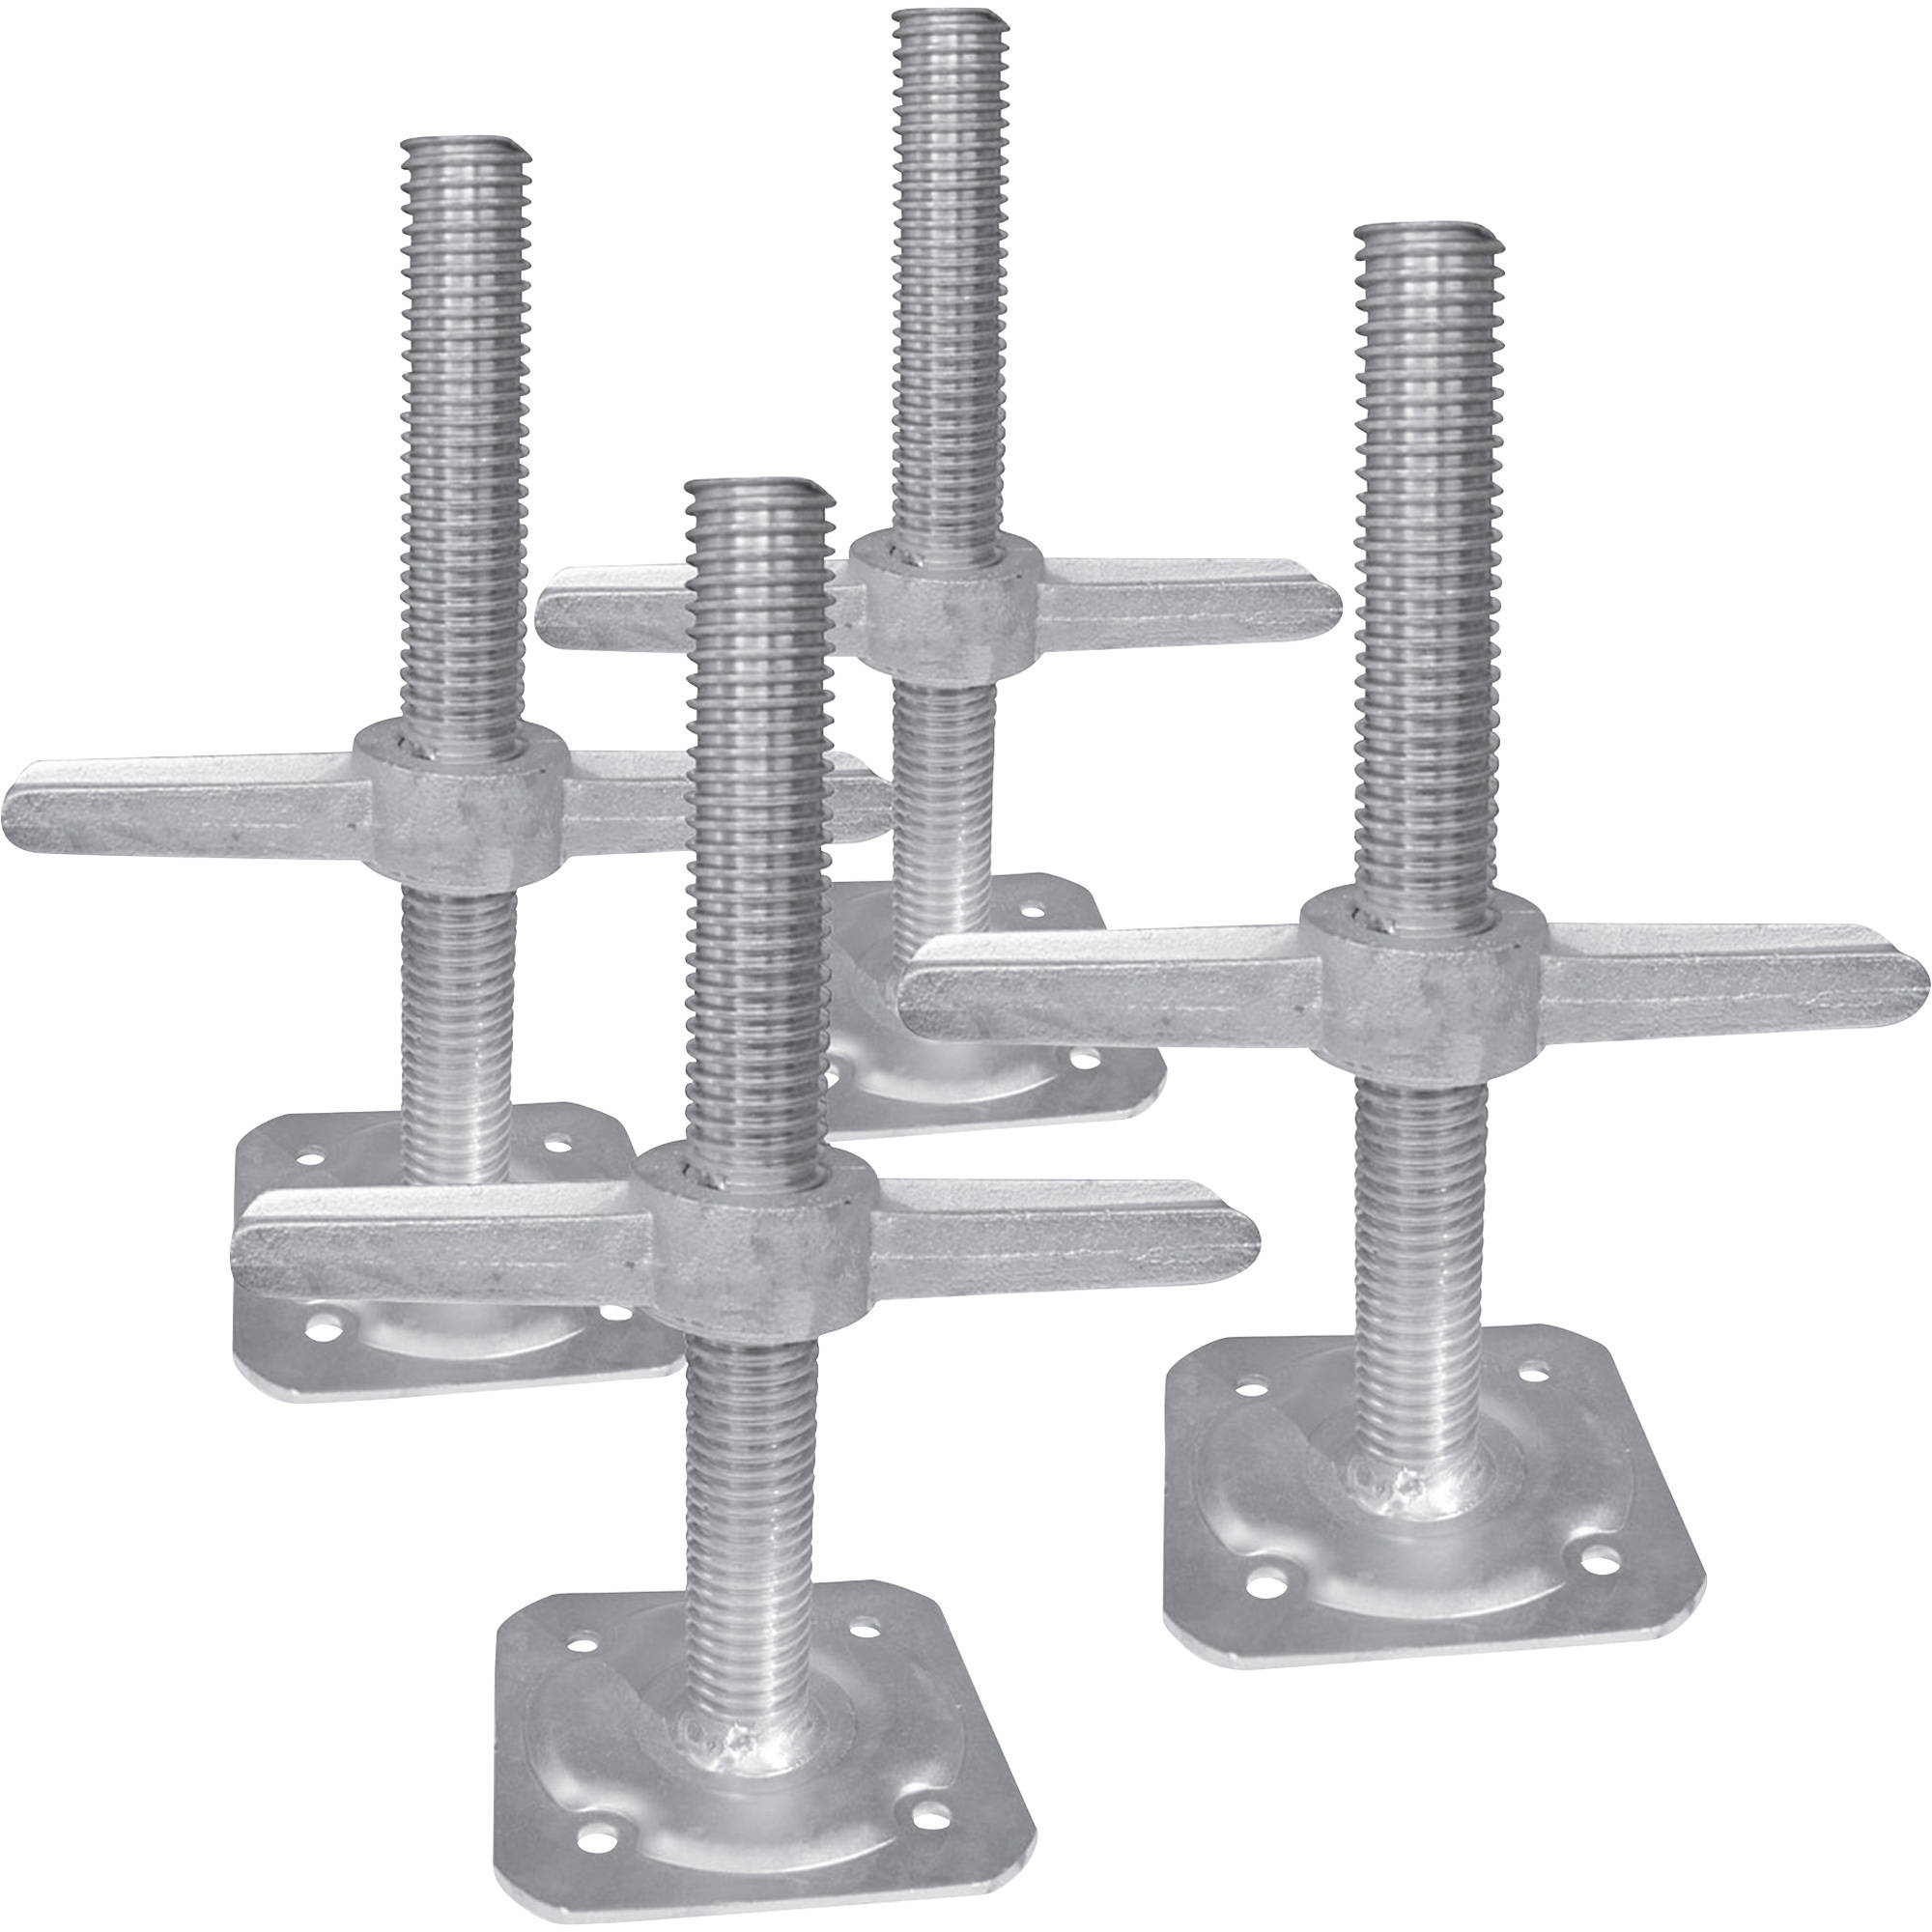 Metaltech Adjustable Leveling Jacks, 4-Pack, For Baker-Style Scaffolding, Model I-IBSJP12H4